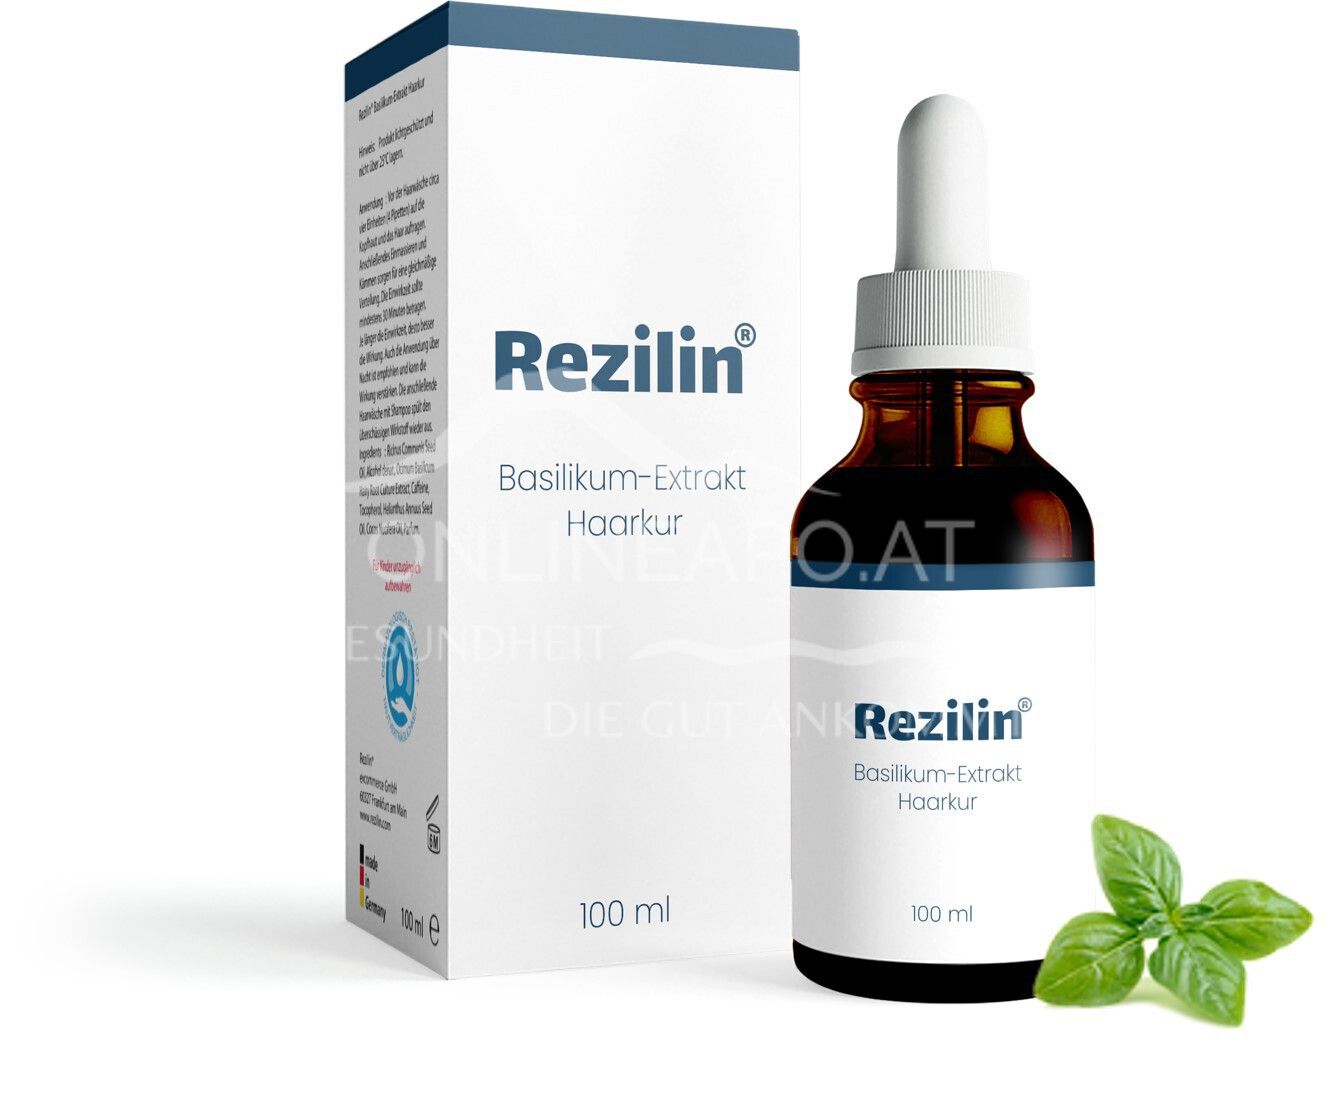 Rezilin® Basilikum-Extrakt Haarkur